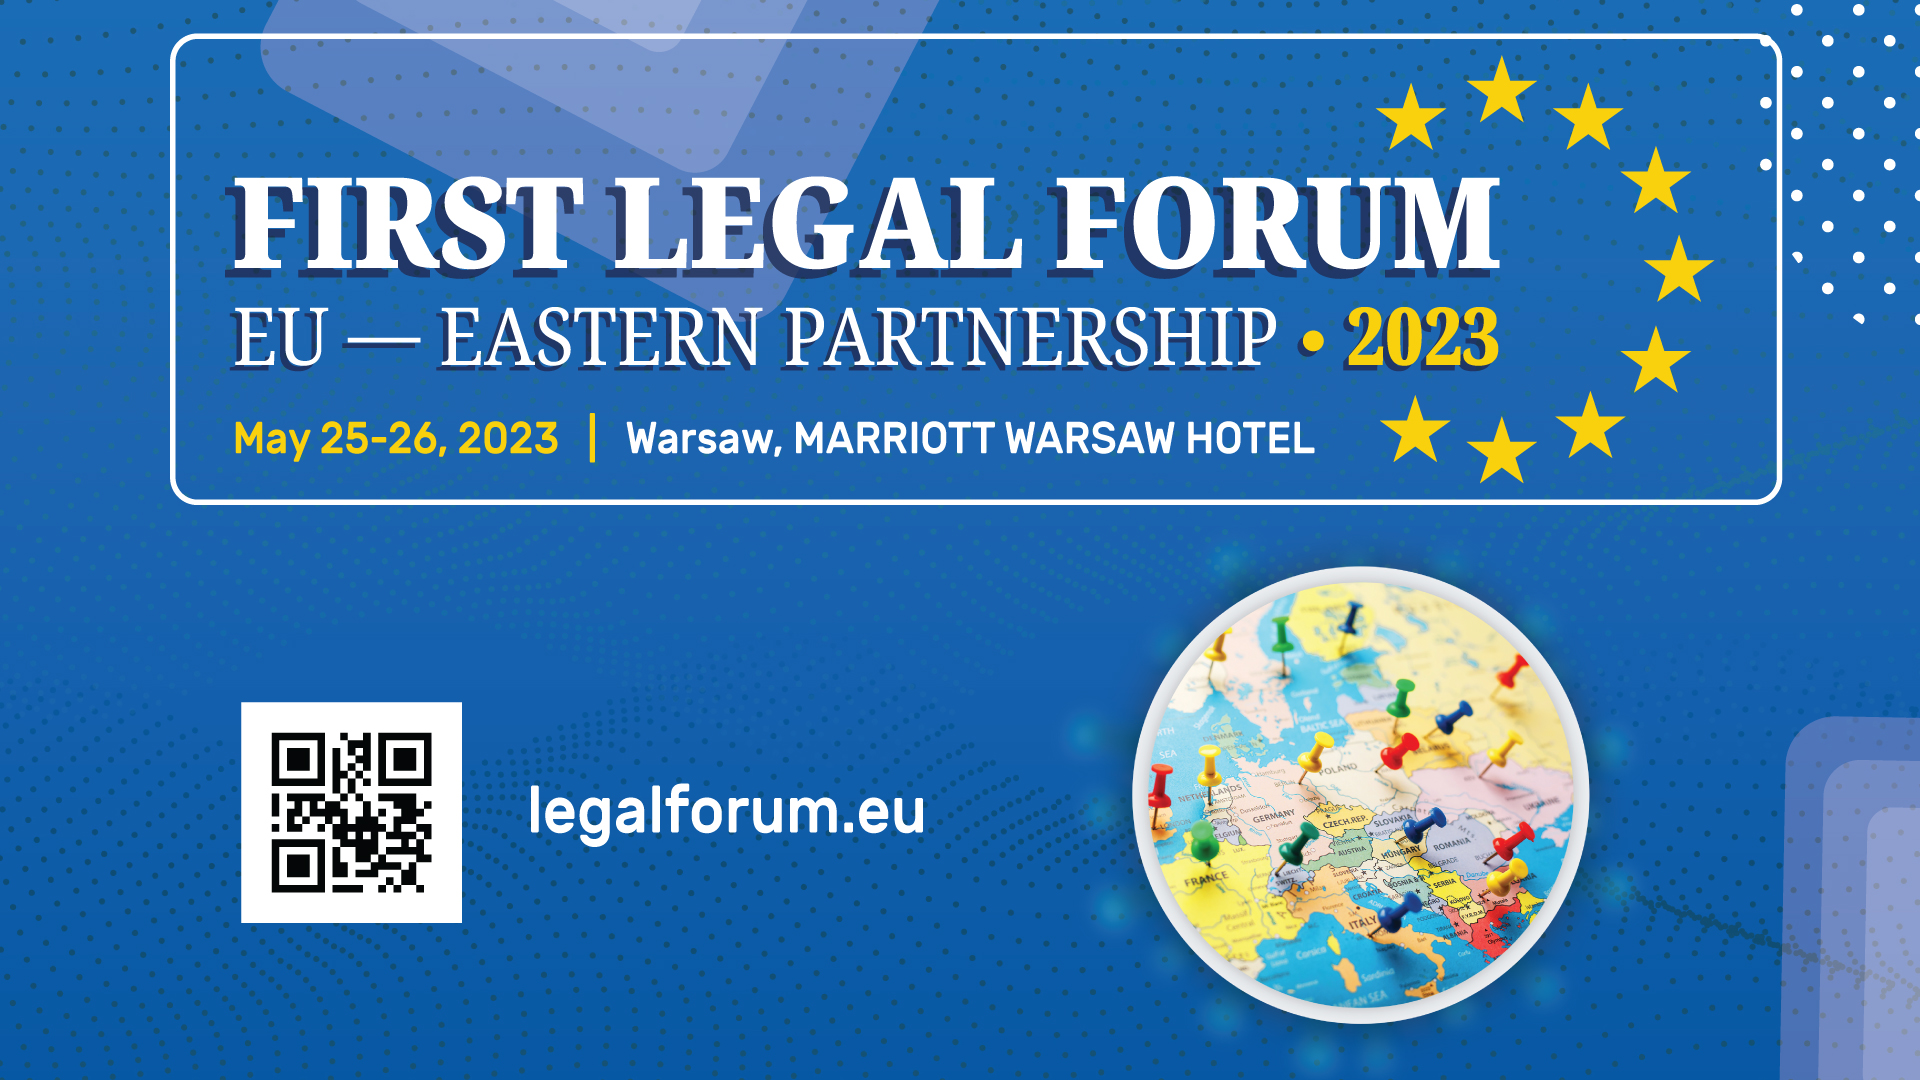 First Legal Forum EU – EASTERN PARTNERSHIP 2023